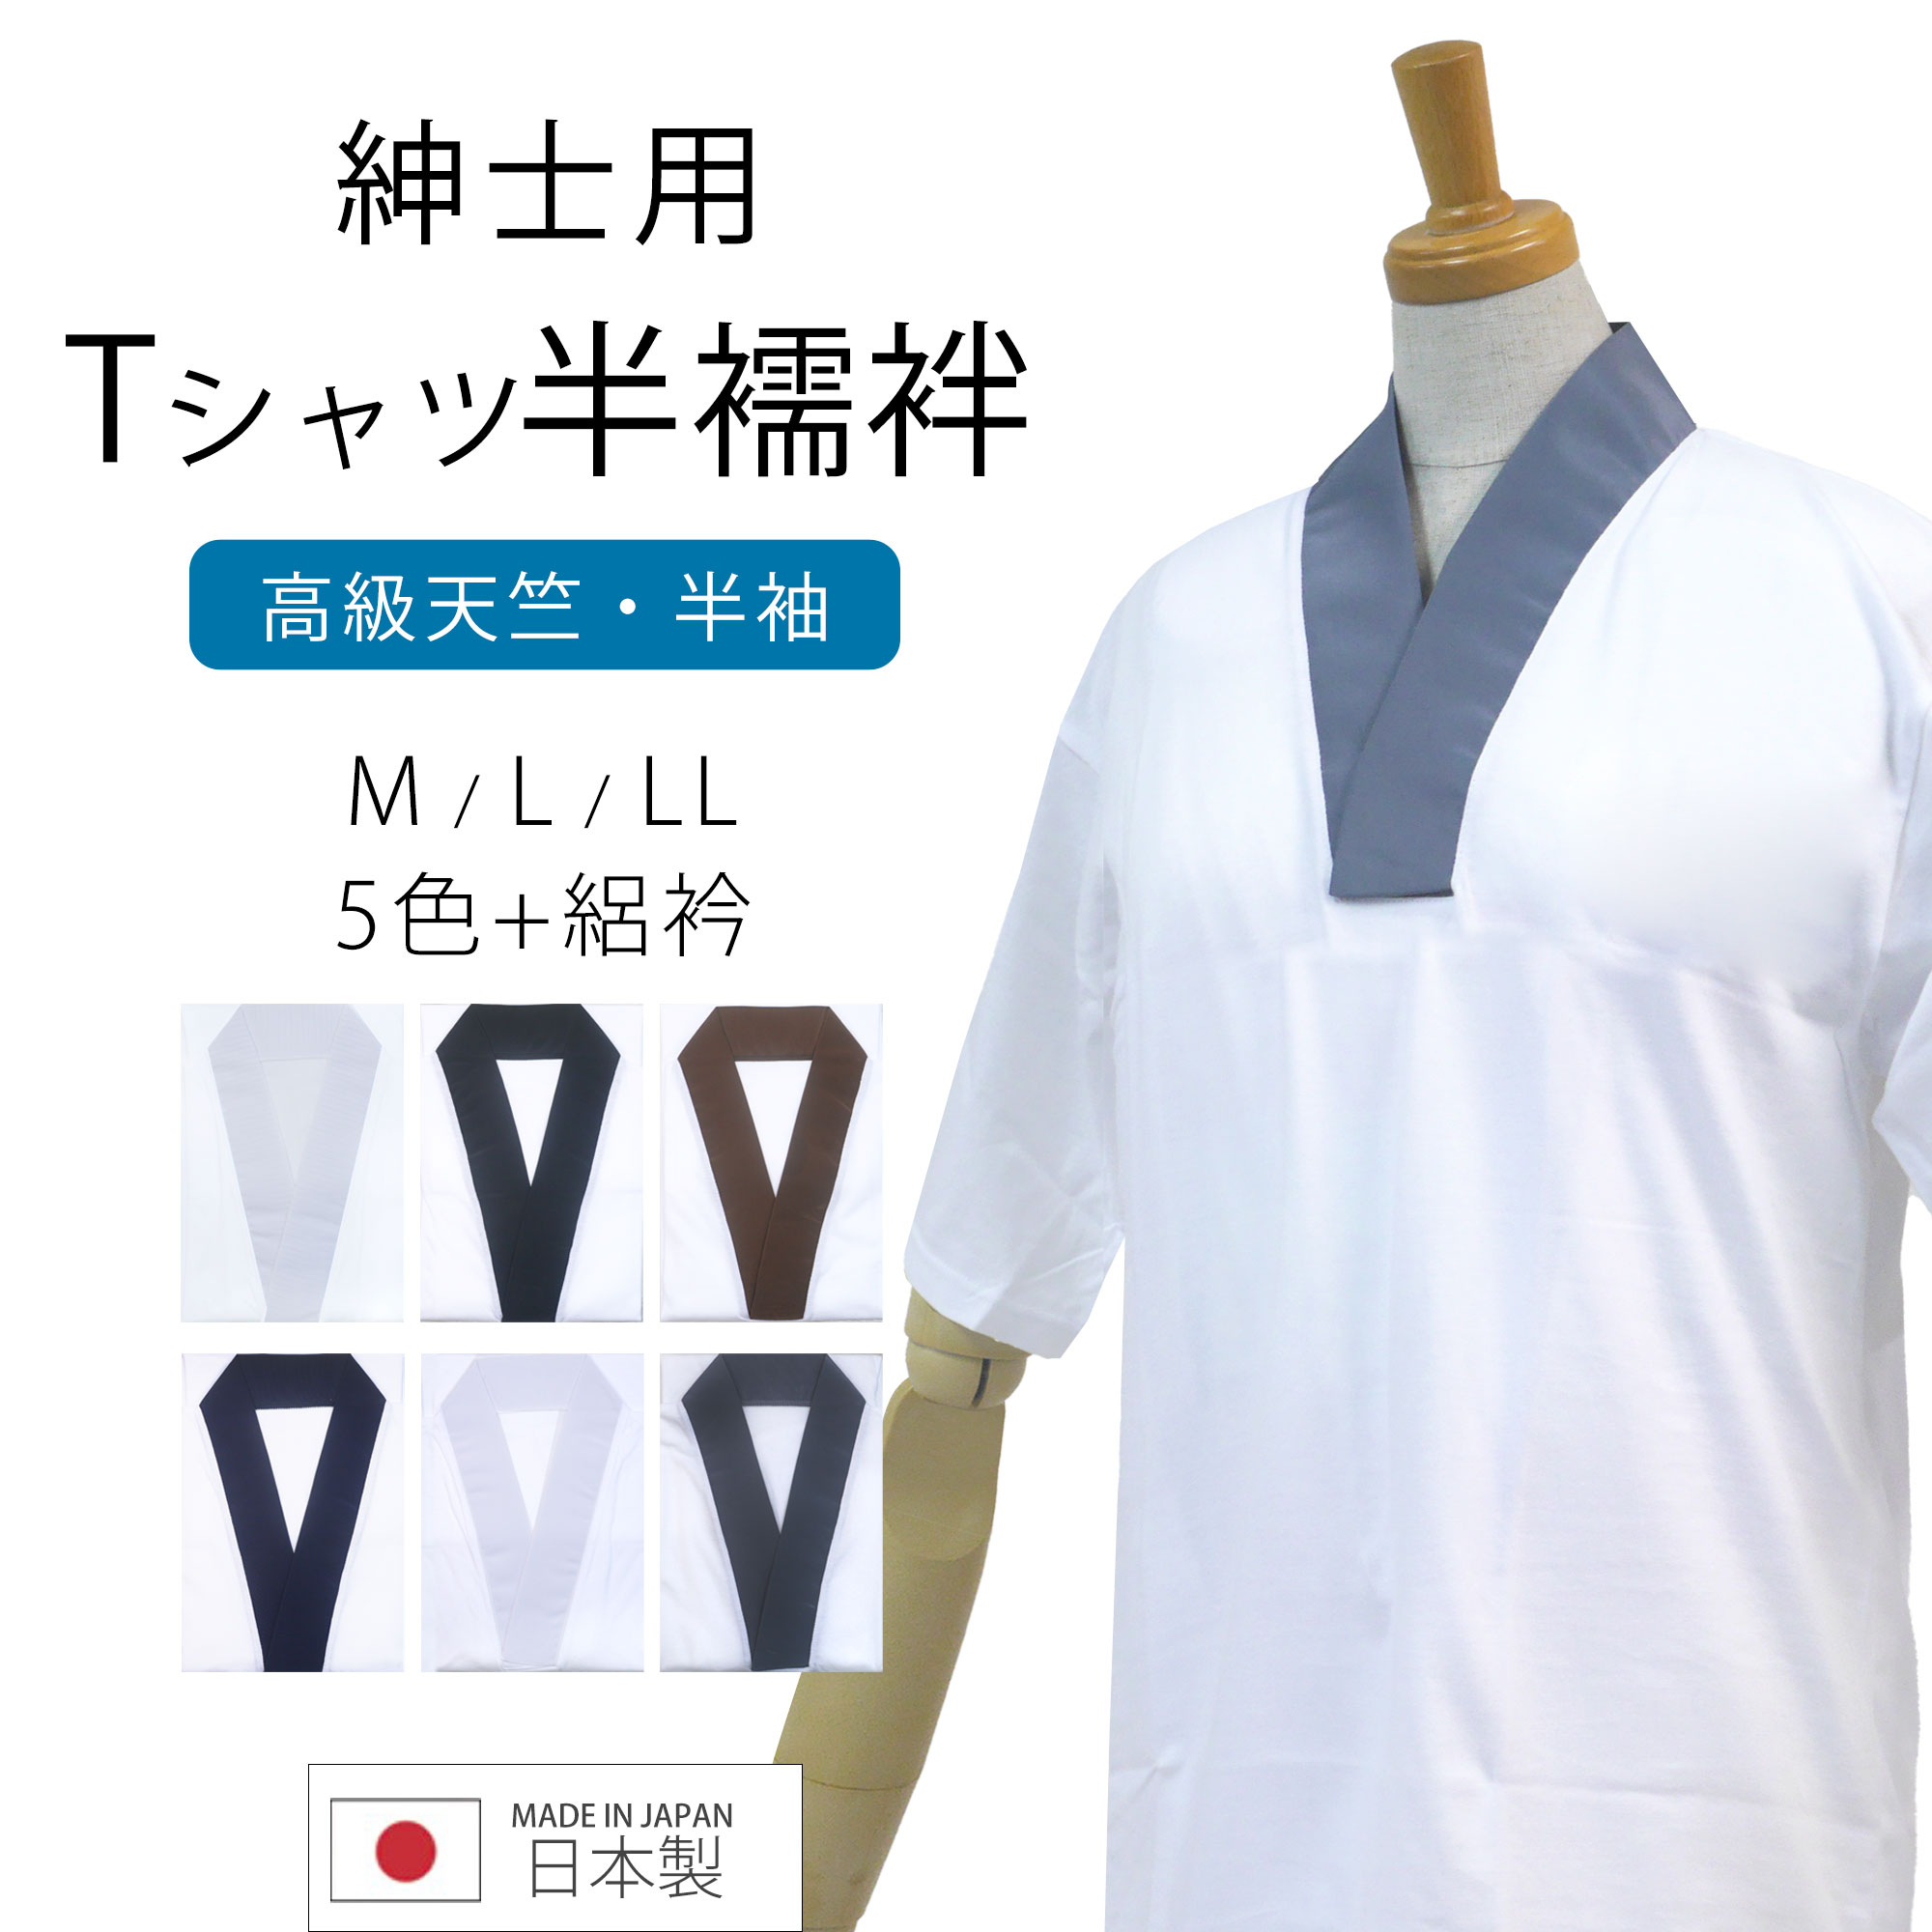 Tシャツ半襦袢 男 メンズ 日本製 半襦袢 高級天竺綿使用 洗える 選べる5色   絽衿 M L LL 3サイズ 和装 マジックベルト 男性 紳士 襦袢 シャツ 肌着 きもの